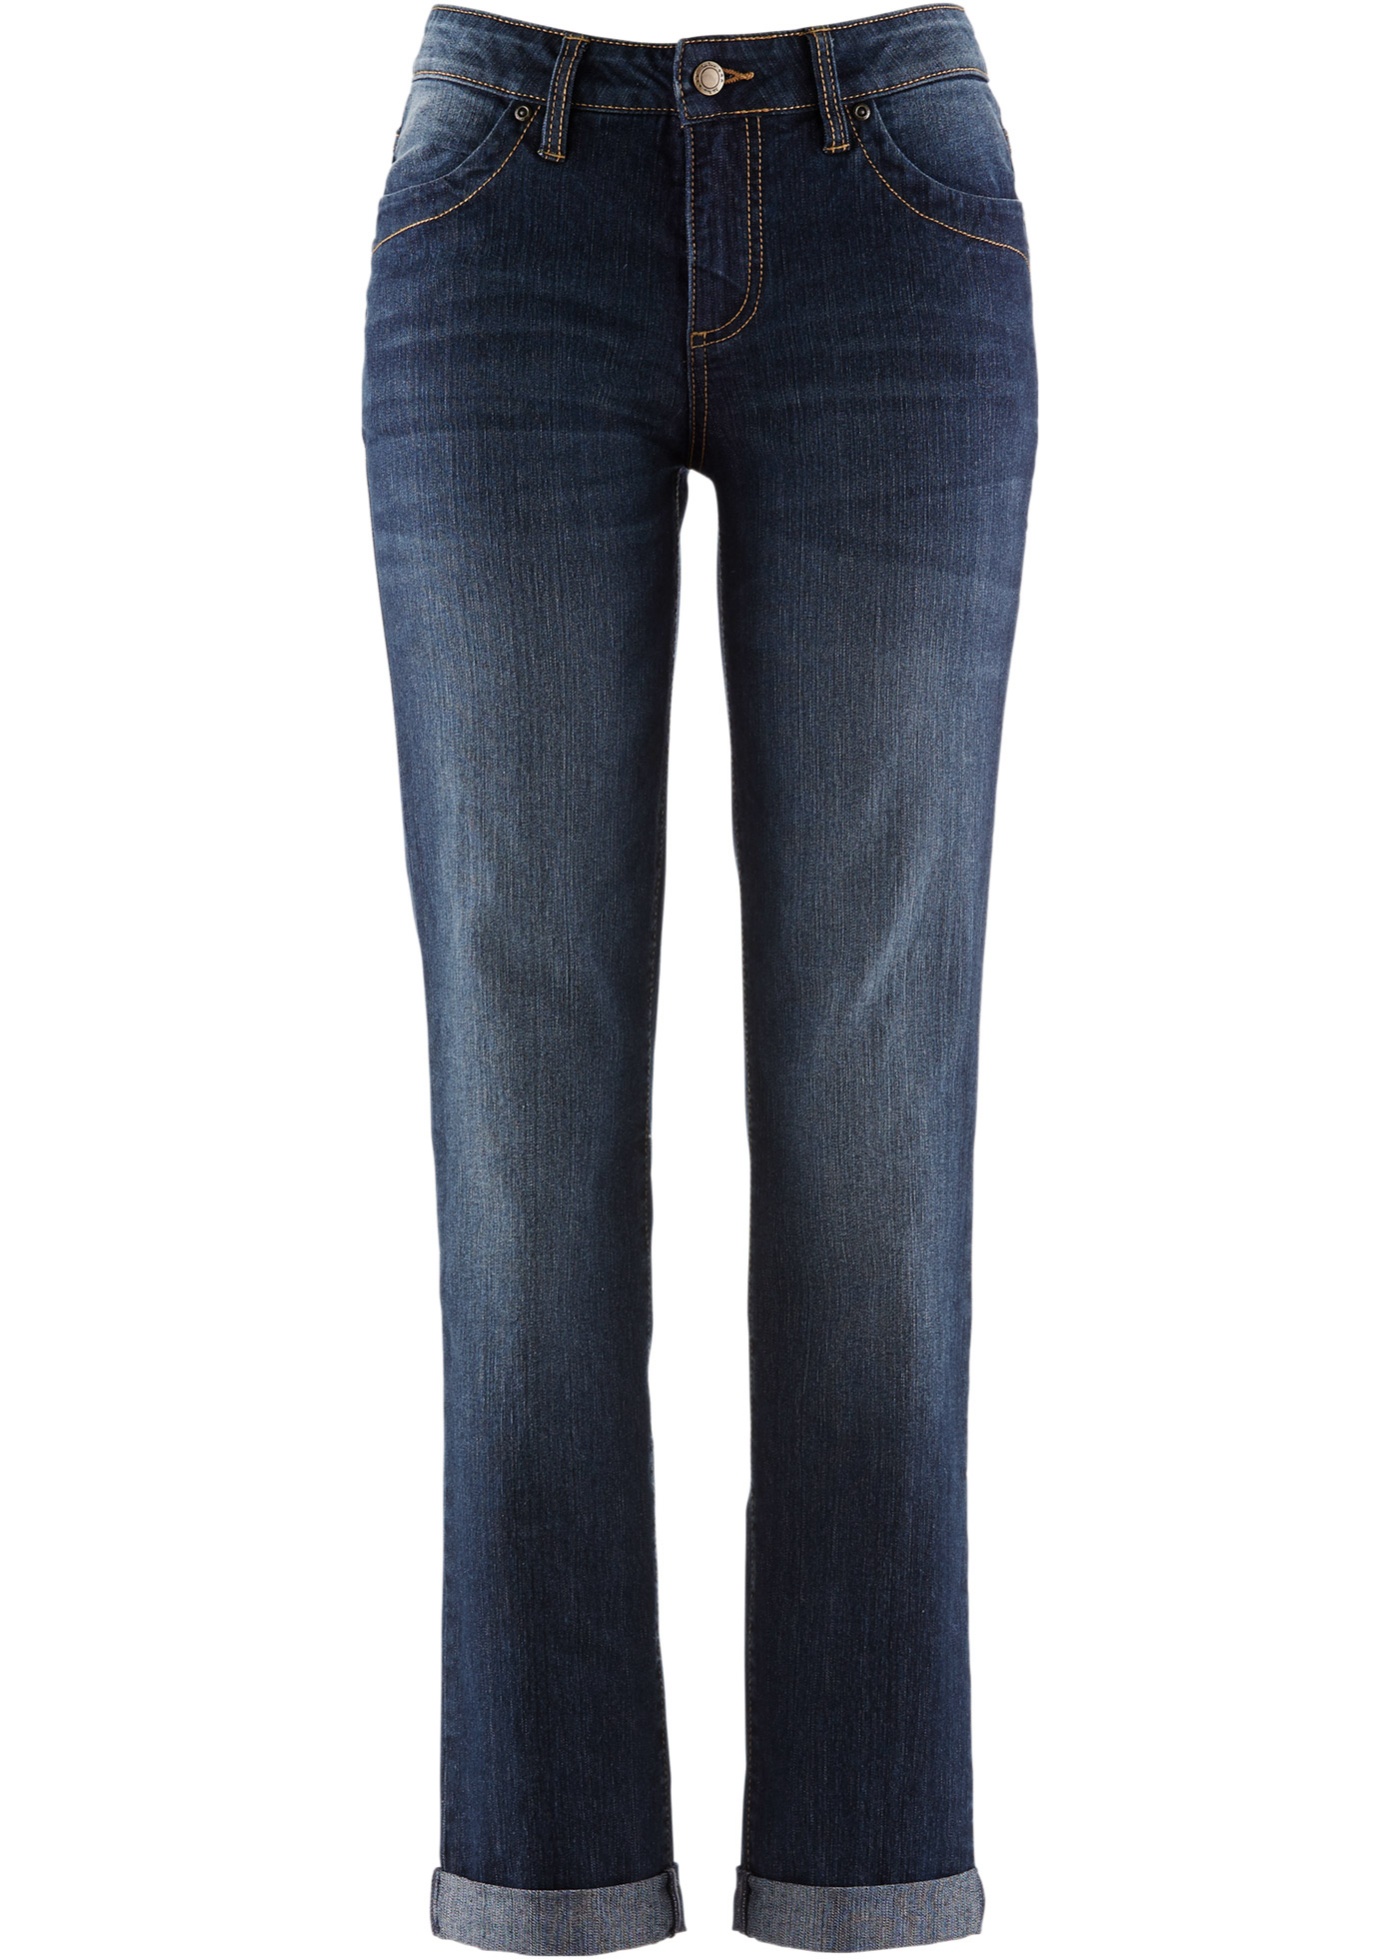 Basic-Jeans mit Stretch in Used-Optik (95183495) in dunkelblau used